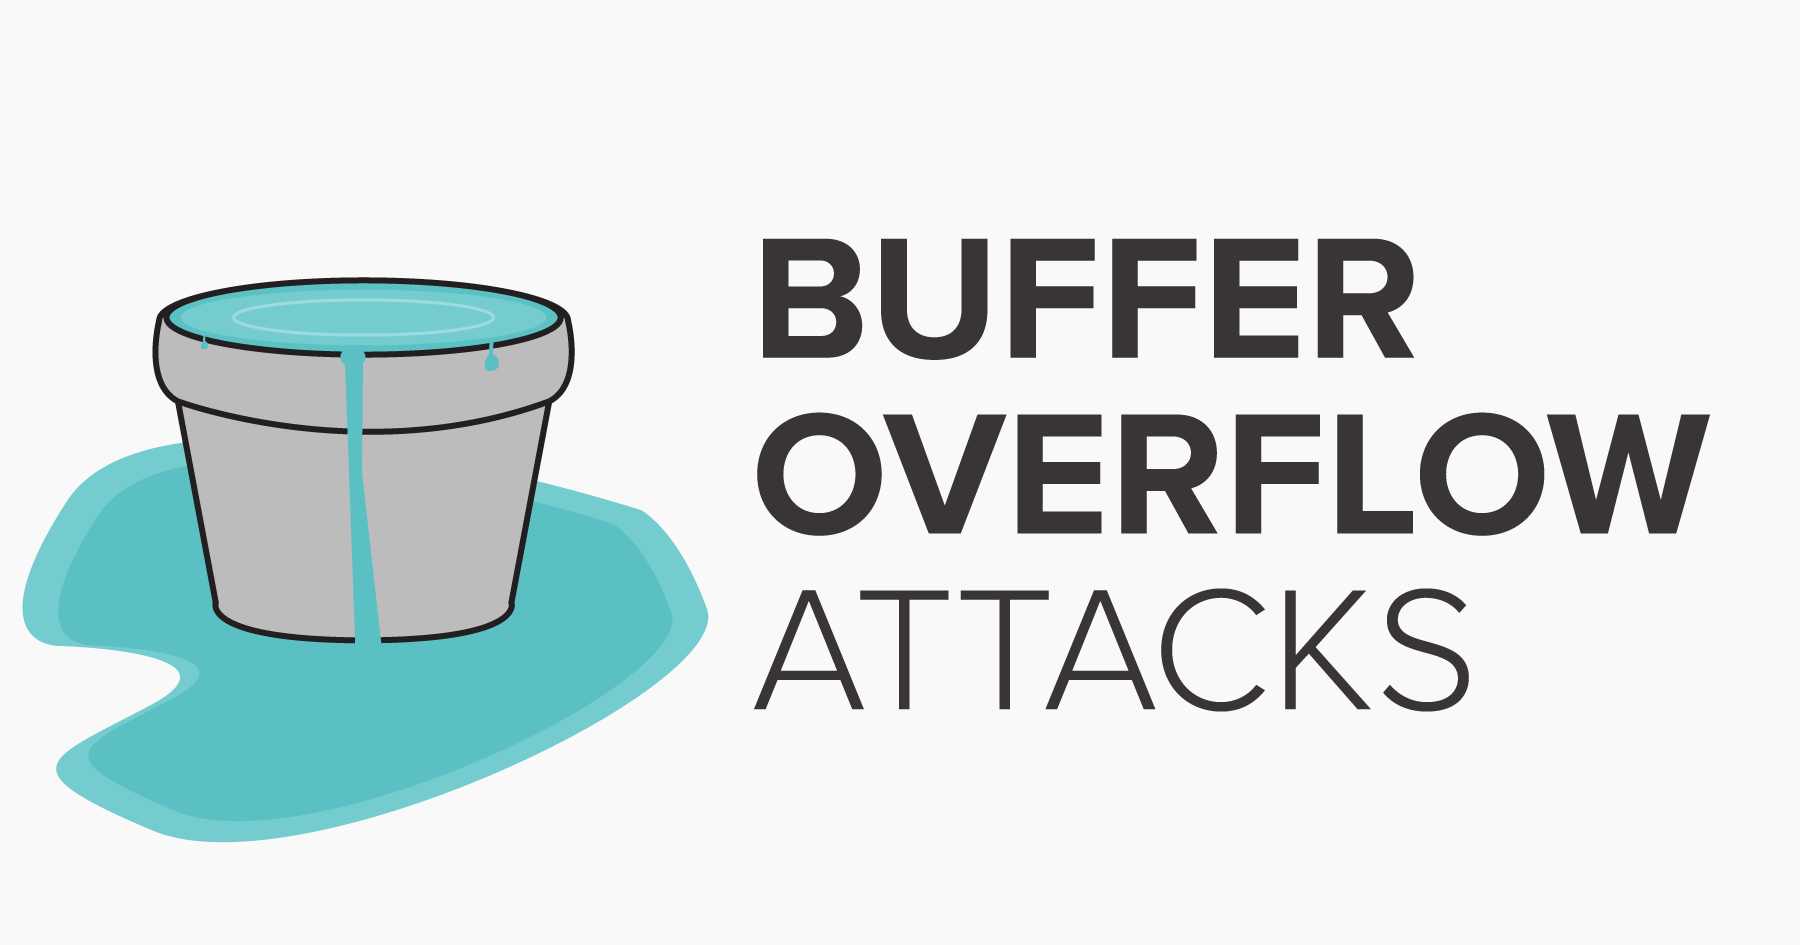 overflow buffer prevention dicc cyberhoot attacks